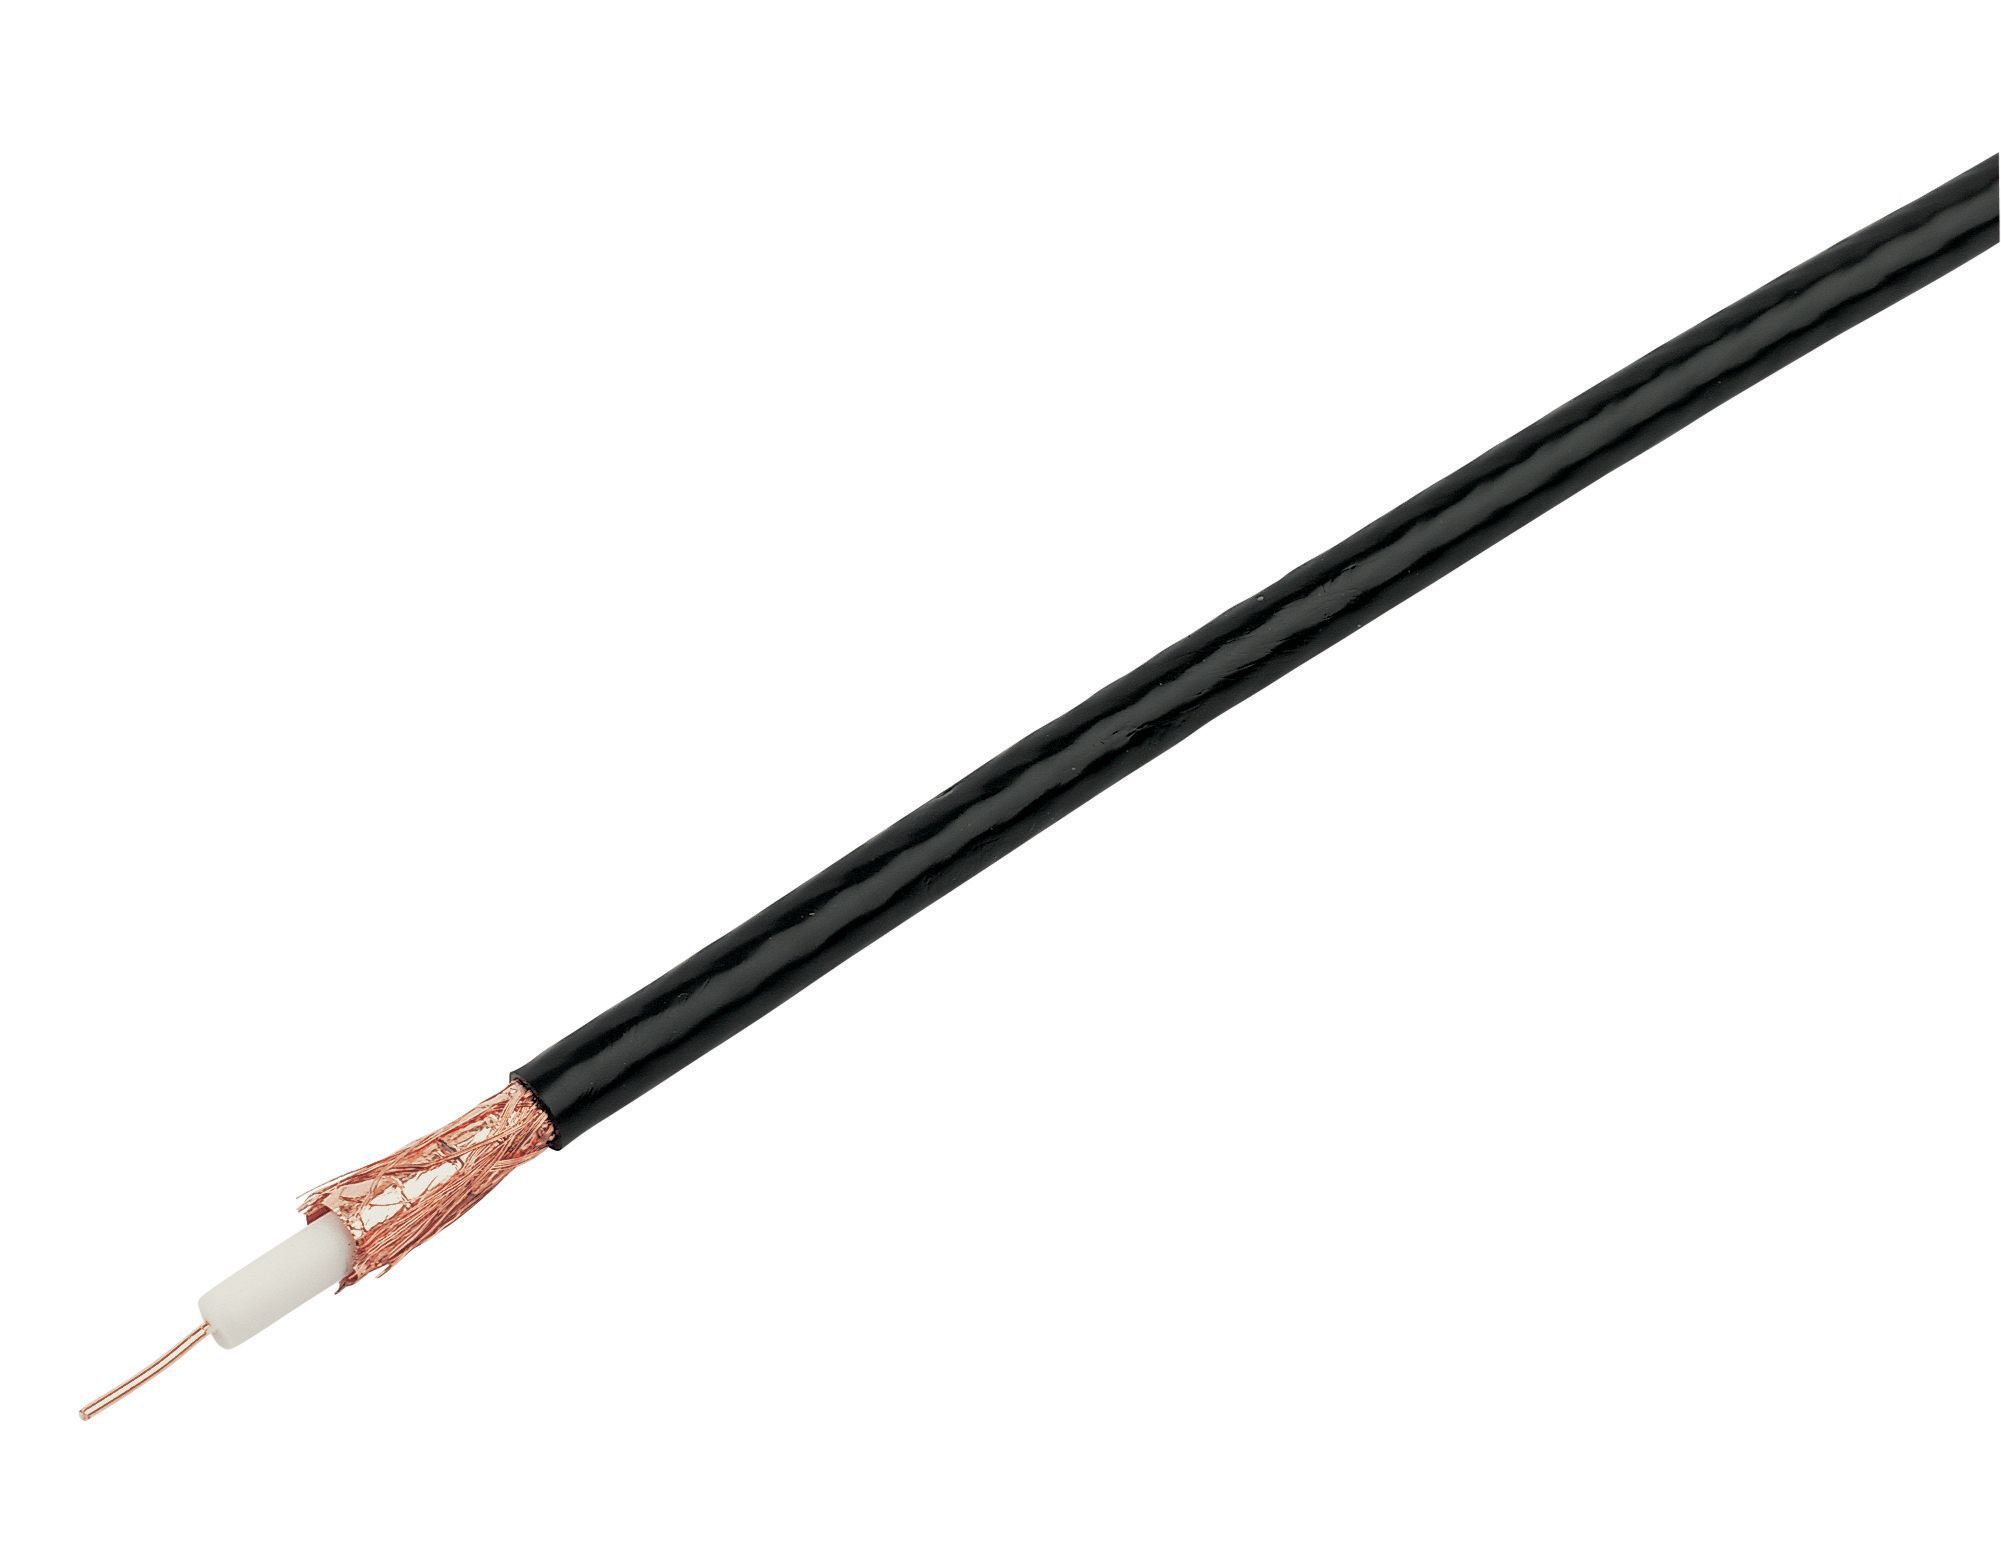 Labgear Black Coaxial cable, 250m